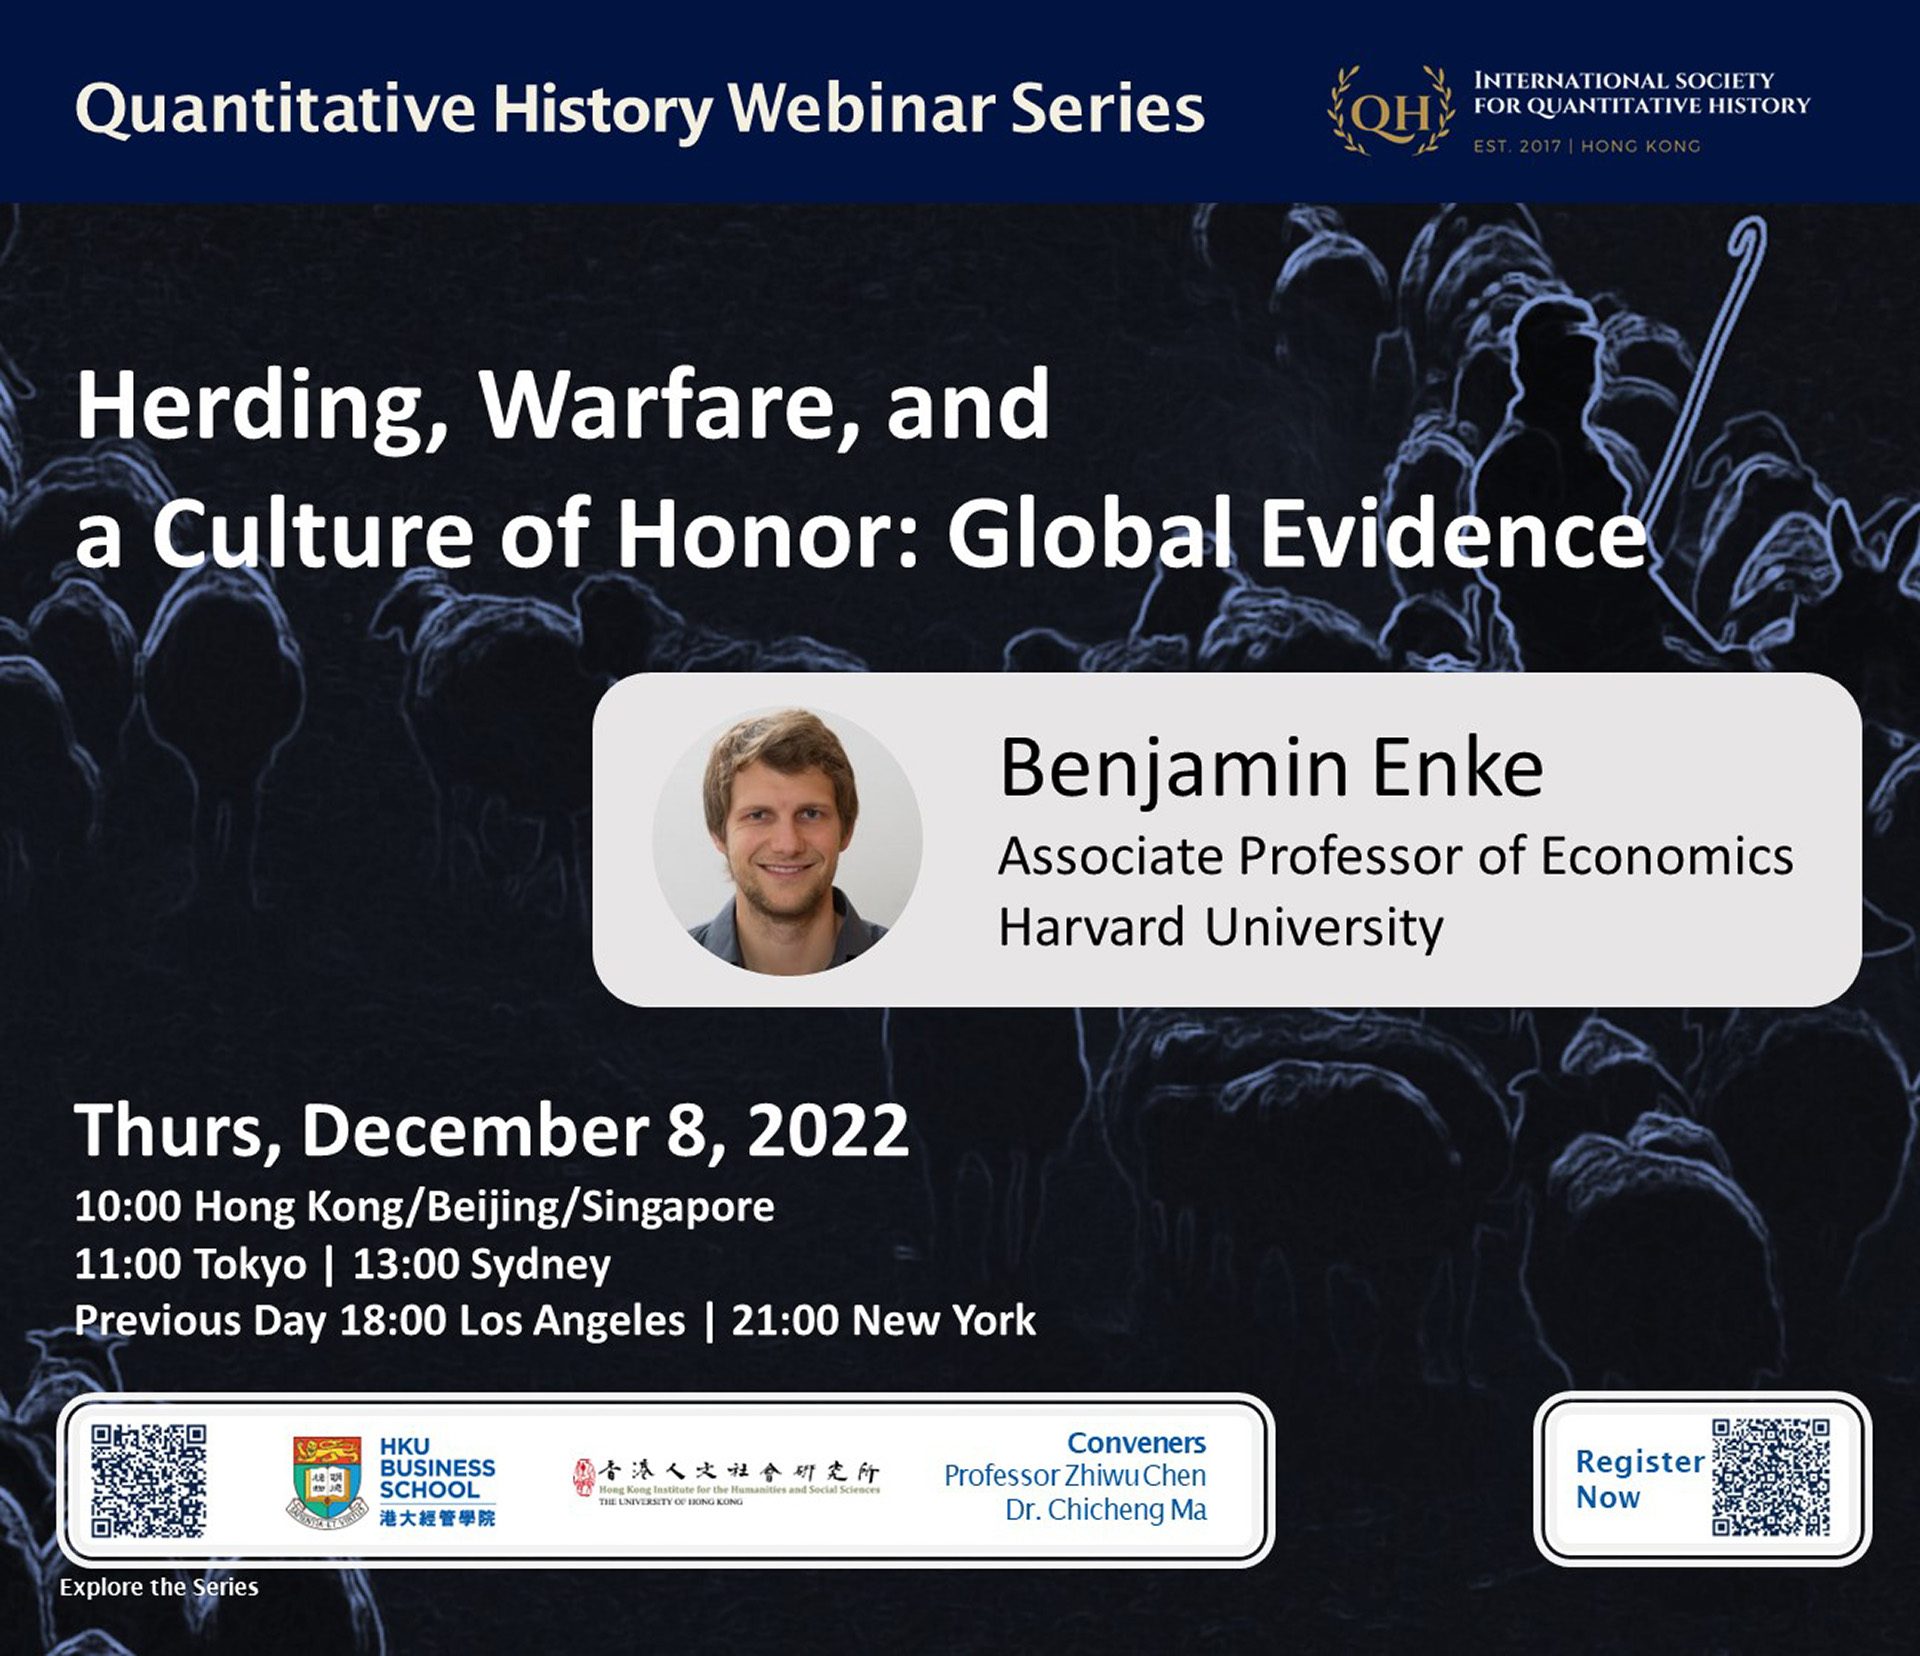 Quantitative History Webinar on “Herding, Warfare, and a Culture of Honor: Global Evidence” by Dr. Benjamin Enke (December 8, 2022)